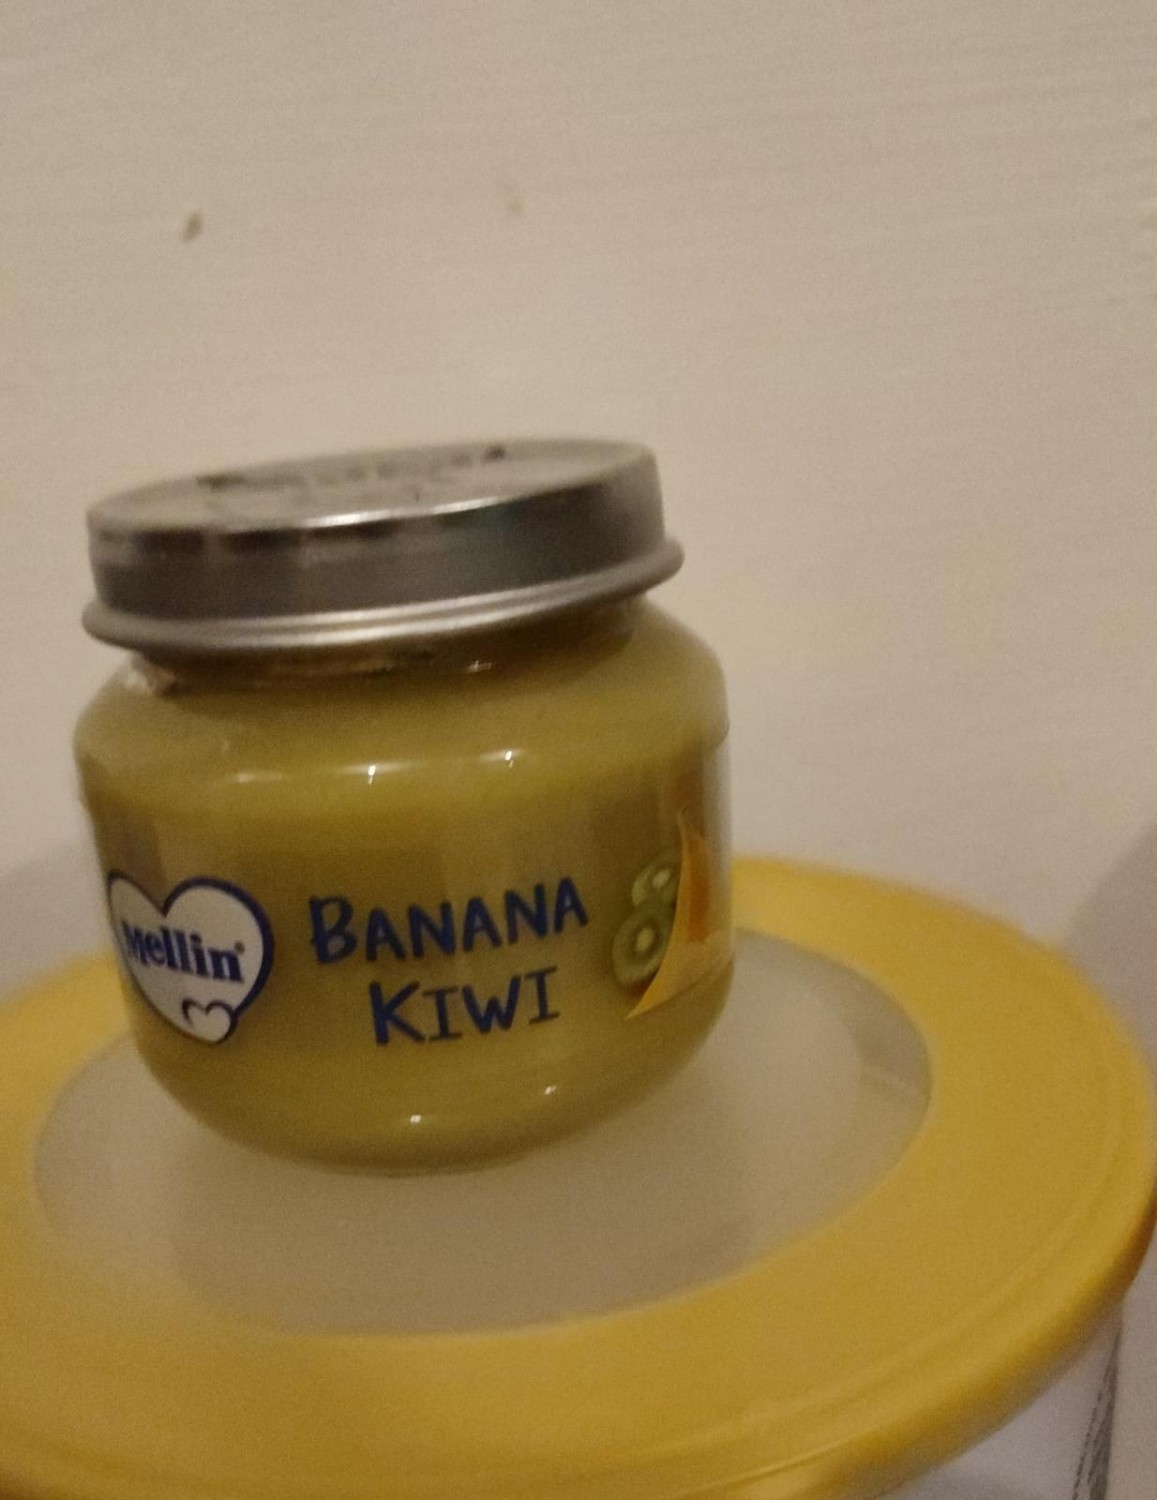 Banana kiwi